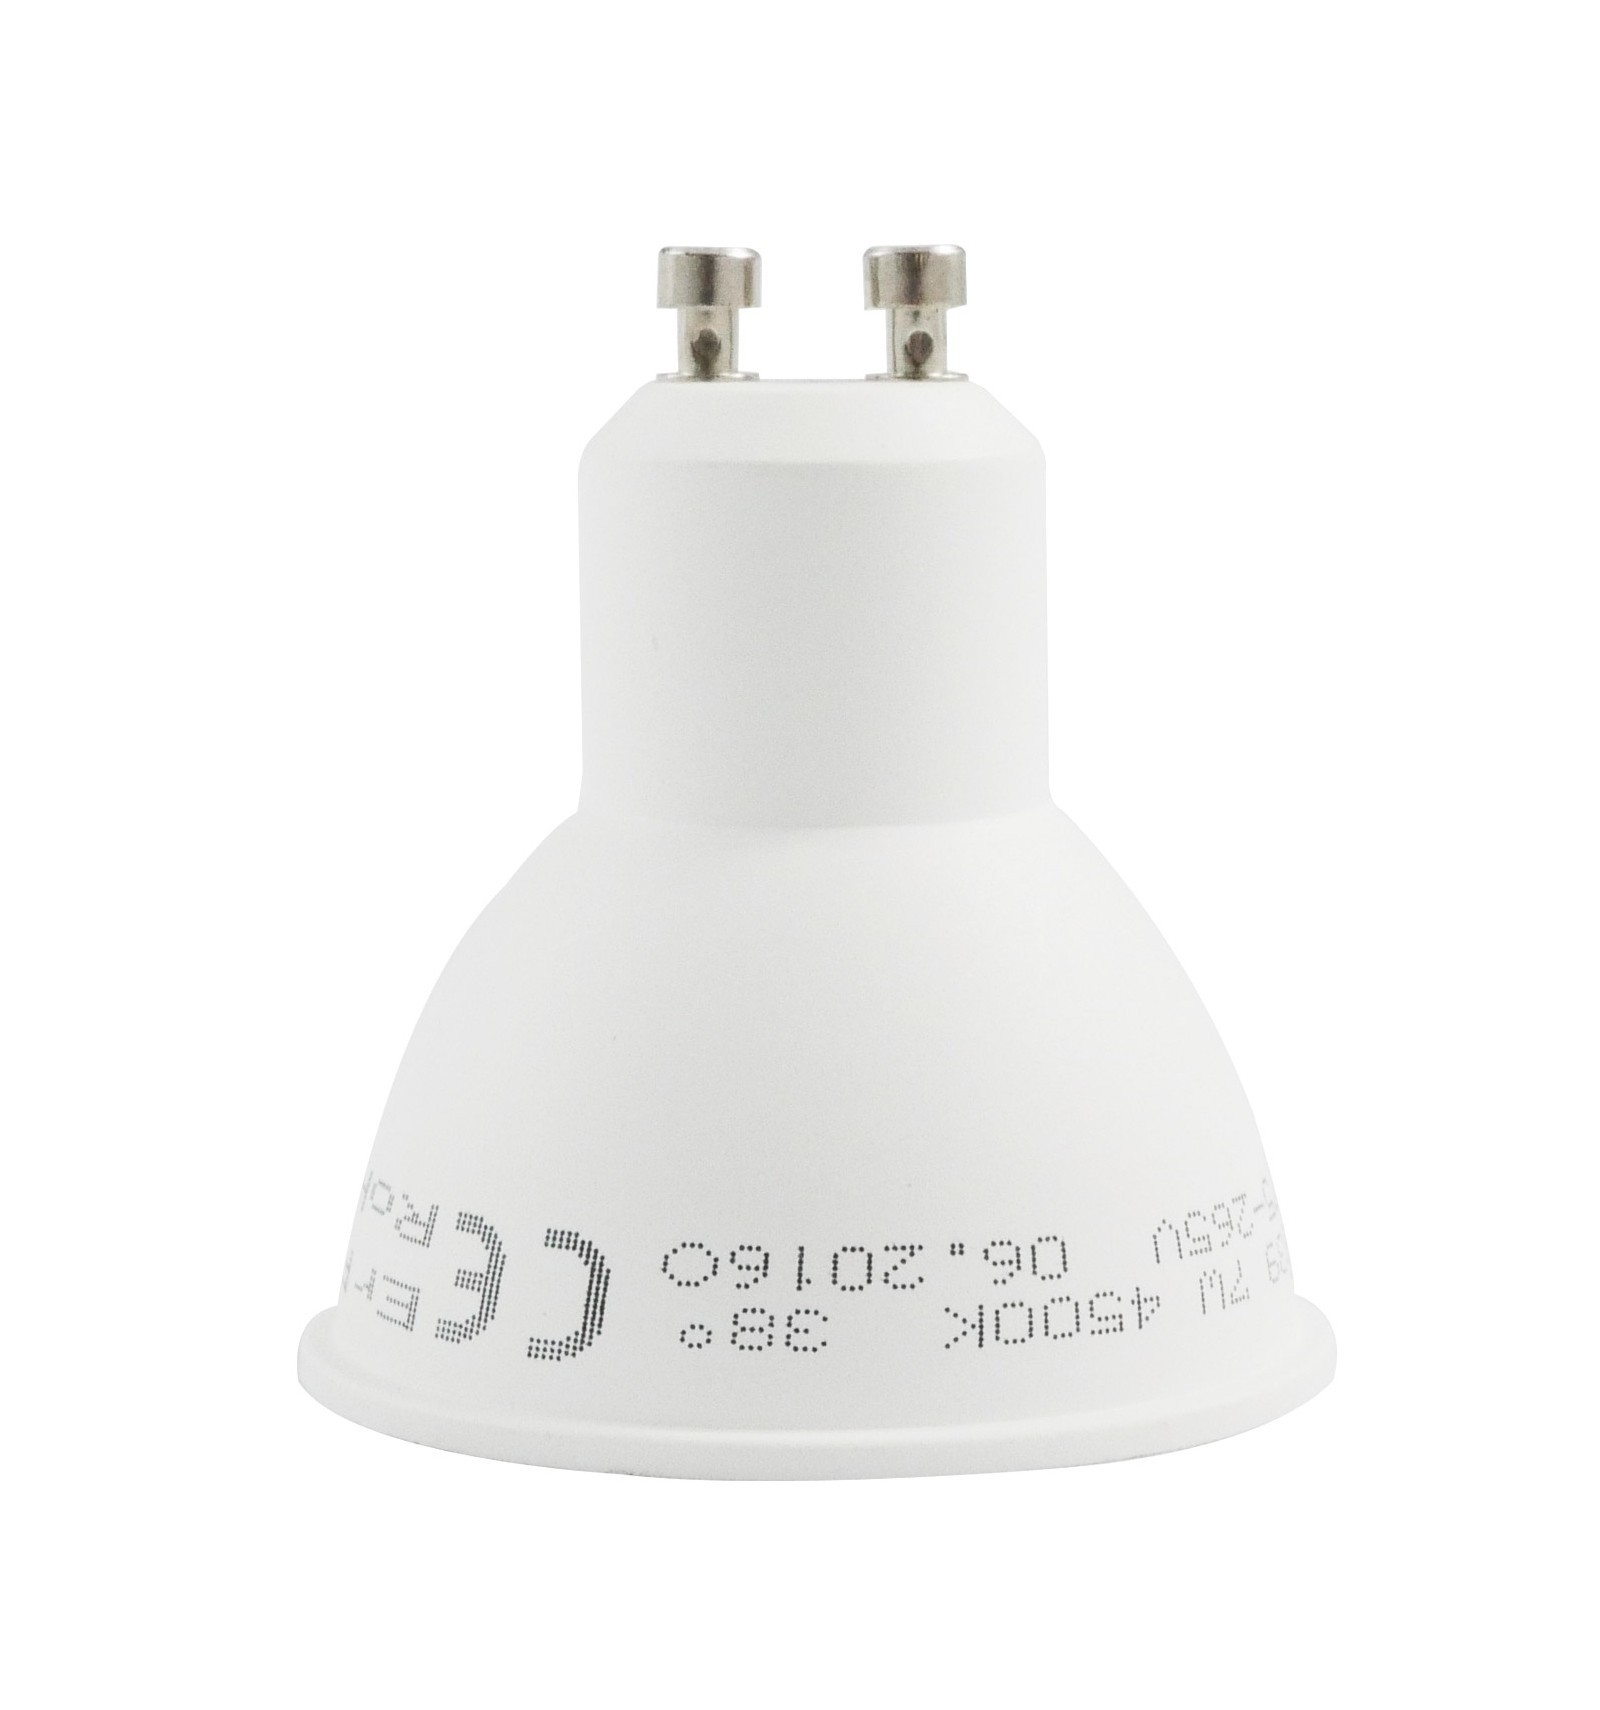 Ampoule LED E14 6W 6000K Blanc Froid - www.europalamp.com